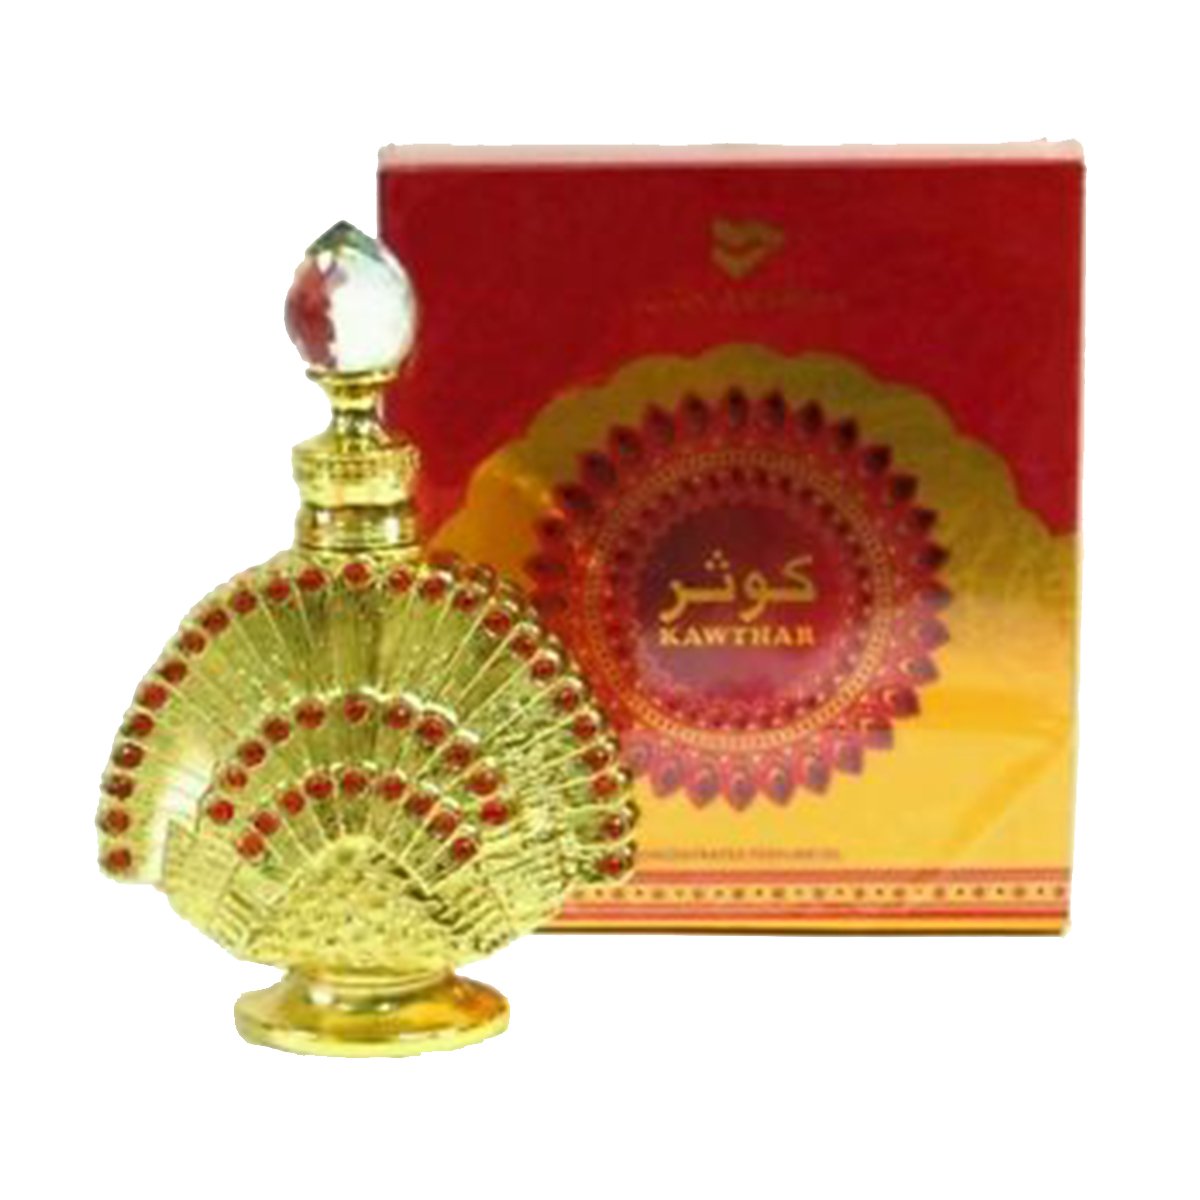 Kawthar Parfum Oil 15ml Swiss Arabian - Smile Europe Wholesale 